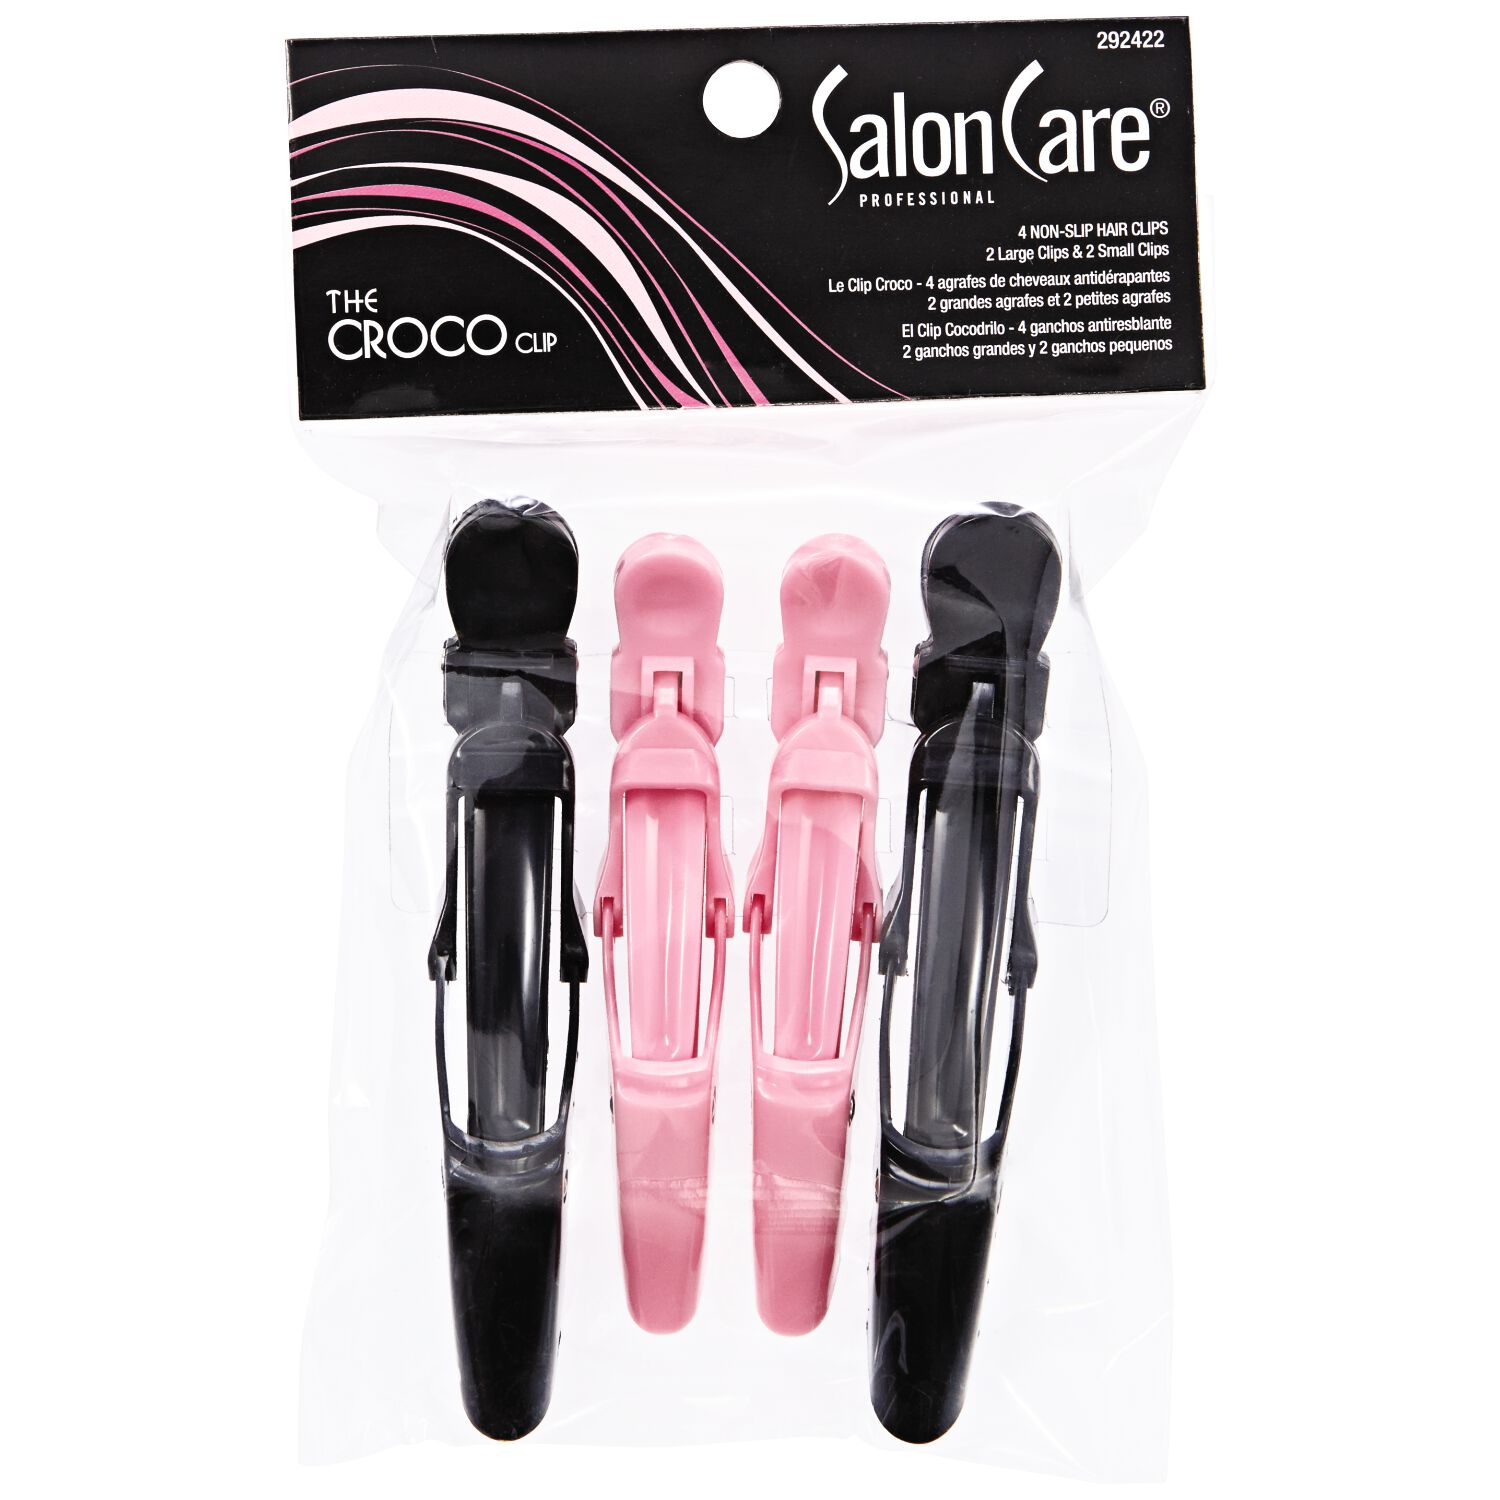 Salon Care Pink & Black Croco Clips | Salon Accessories | Sally Beauty